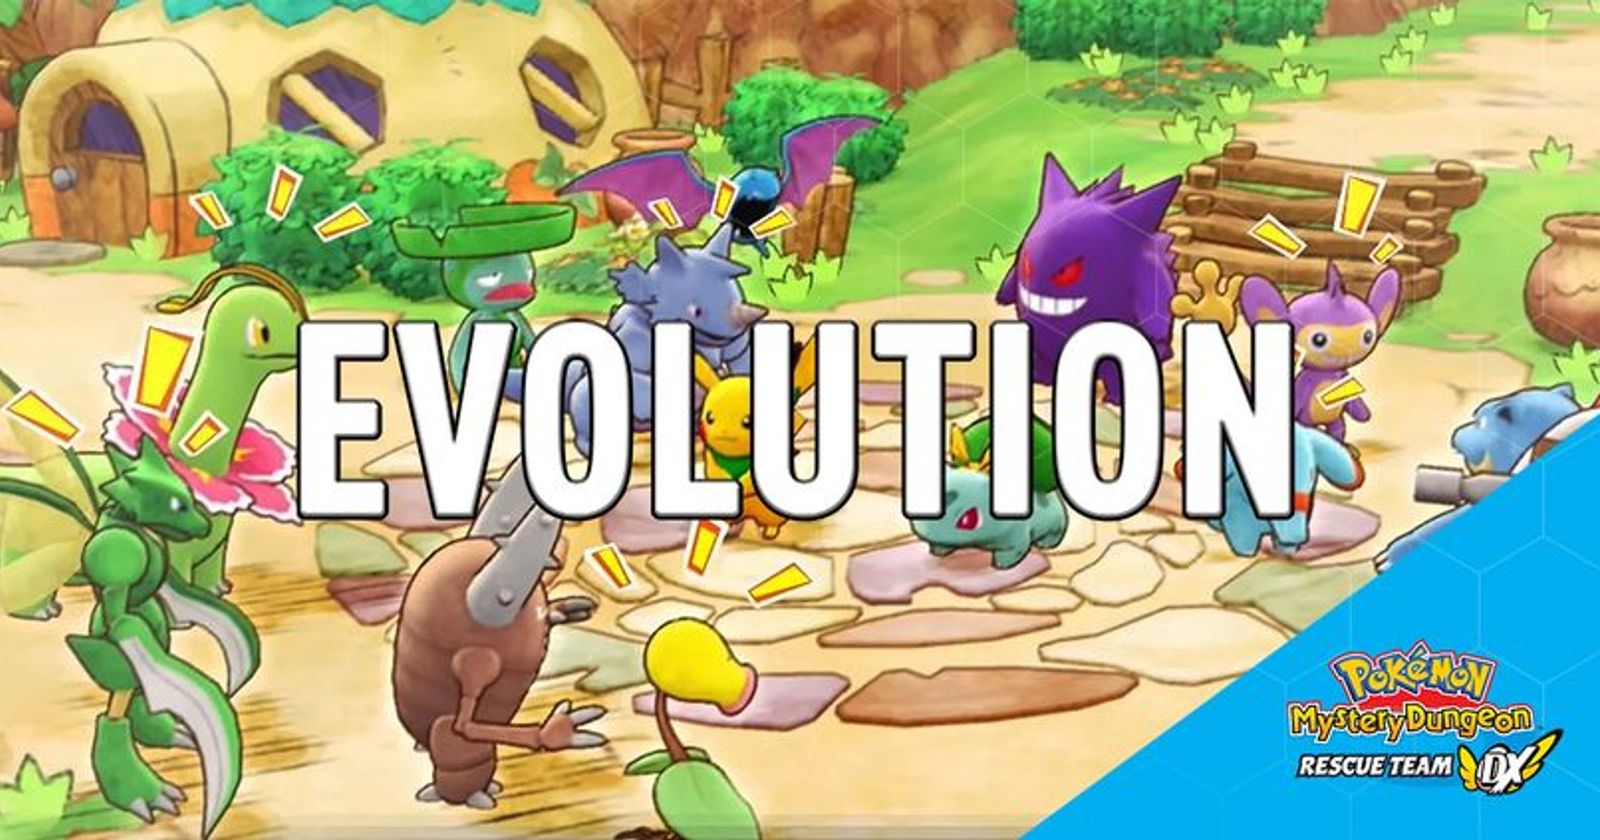 Pokemon Mystery Dungeon :: Evolution Guide